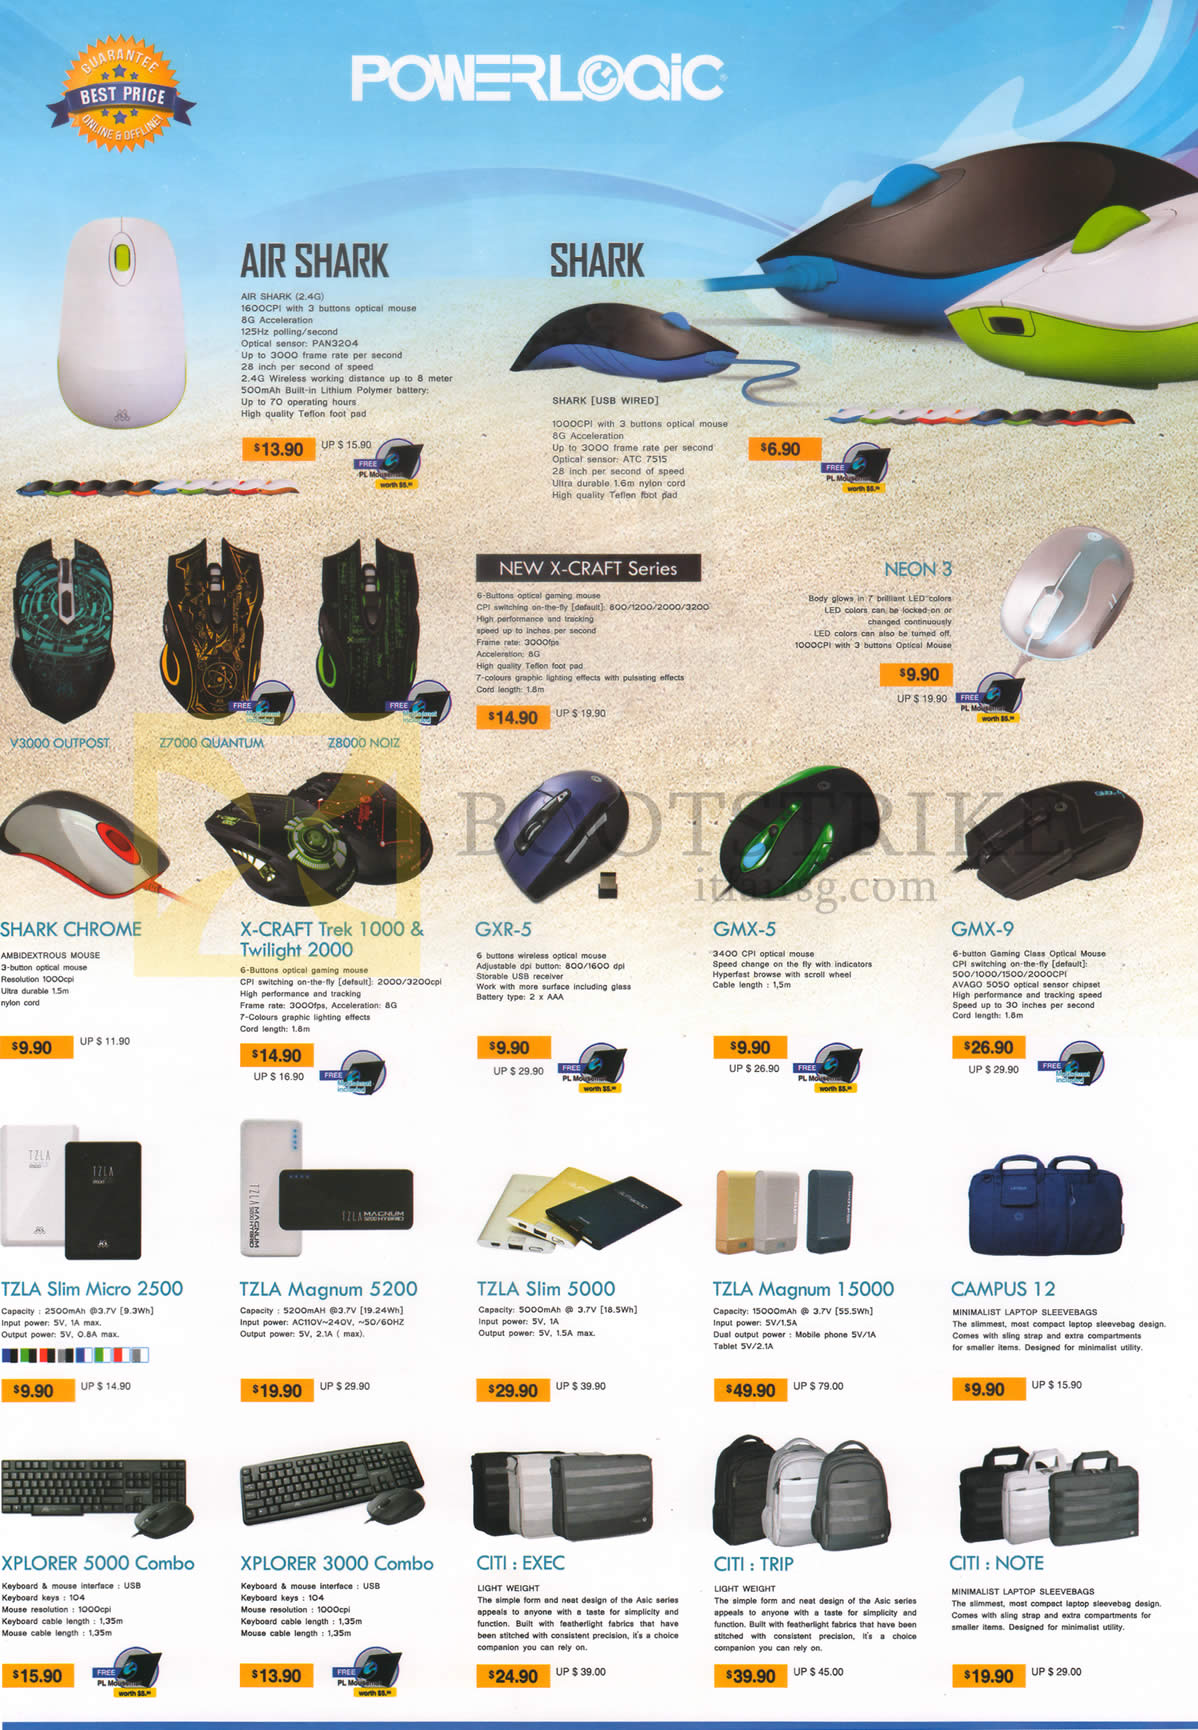 COMEX 2015 price list image brochure of Powerlogic Mouse Air Shark, Shark X-craft Series, Neon 3, Shark Chrome, X-craft Trek 1000 N Twilight 2000, GXR-5, GMX-5, GMX-9, Powerbanks TZLA Slim Micro 2500, MAgnum 5200, Slim 5000